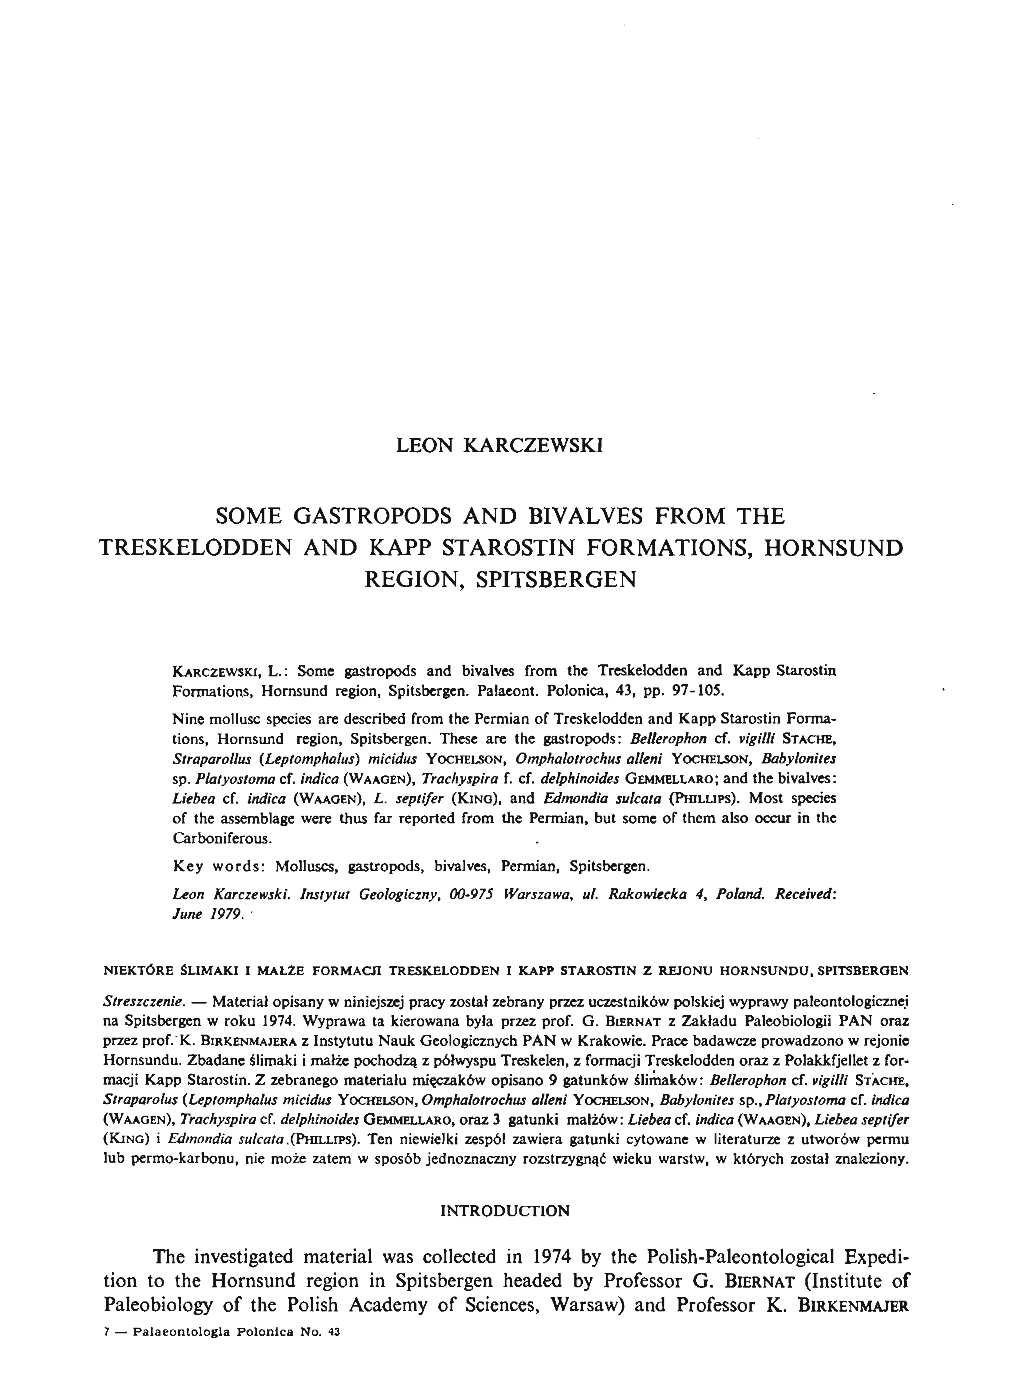 SOME GASTROPODS and BIVALVES from the TRESKELODDEN and KAPP STAROSTIN FORMATIONS, HORNSUND REGION, SPITSBERGEN -.: Palaeontologia Polonica